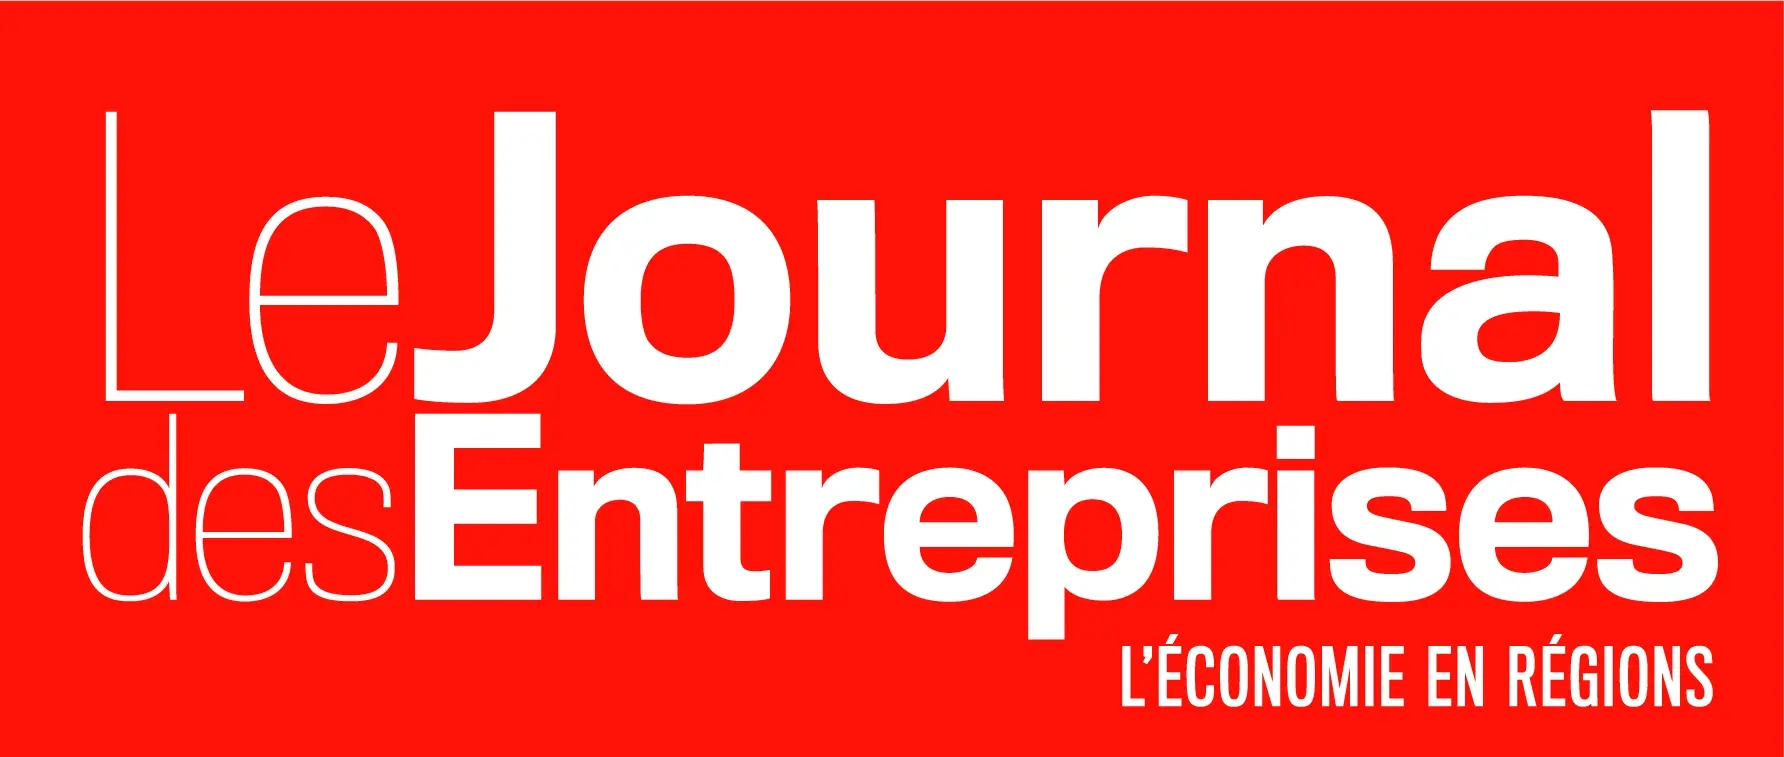 Logo du journal des entreprises